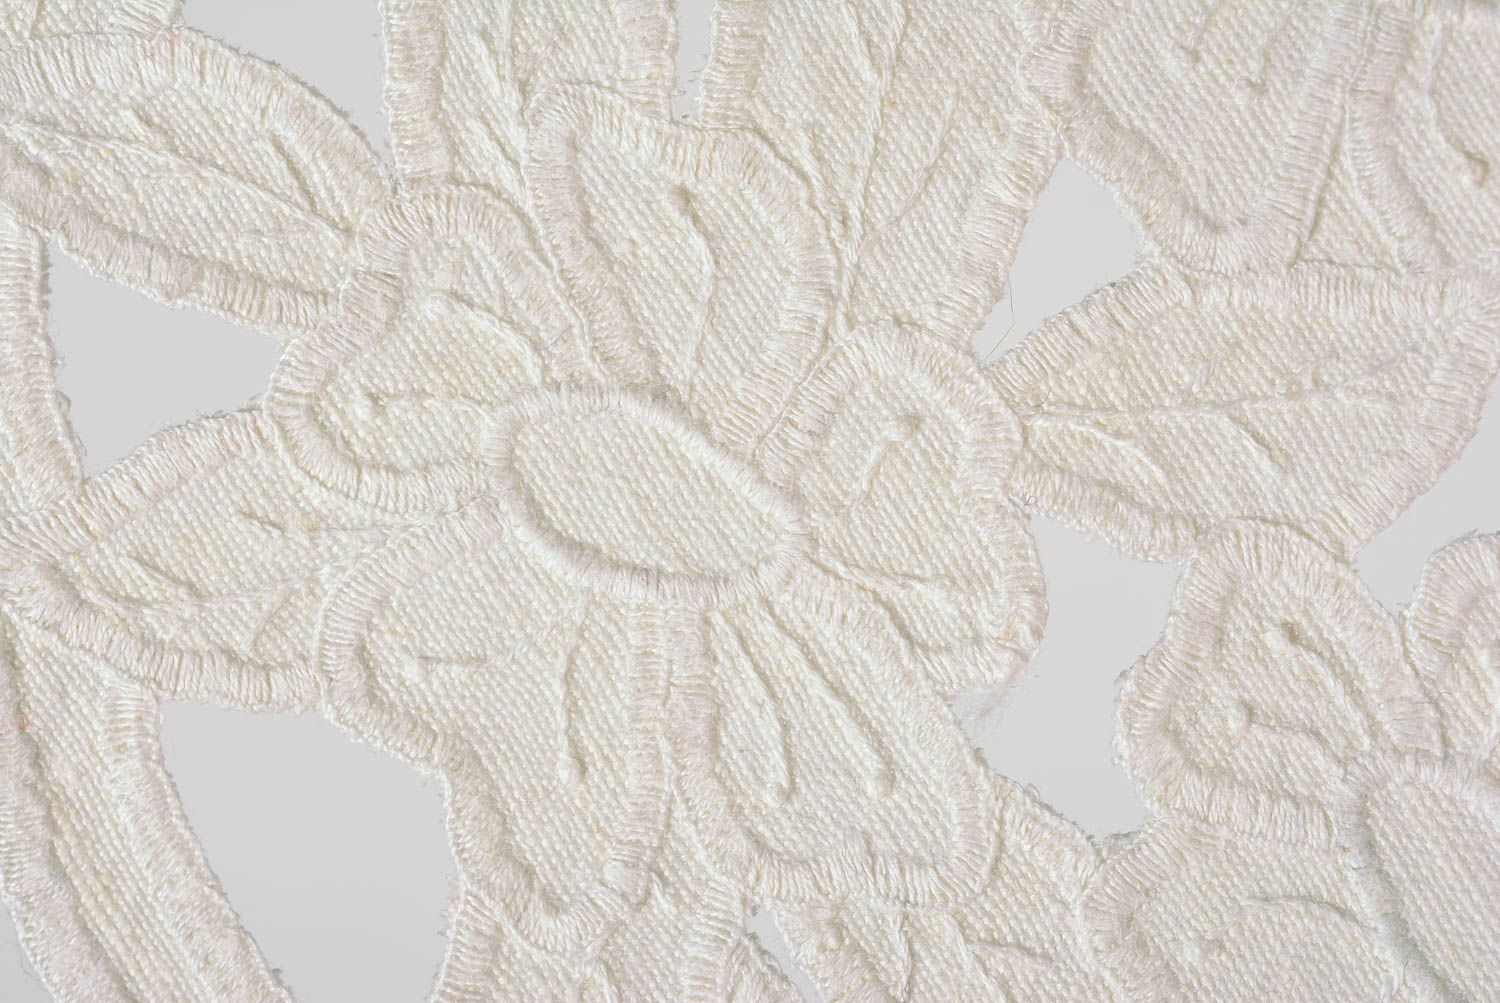 Handmade linen napkin designer interior decor ideas white flower napkin photo 4